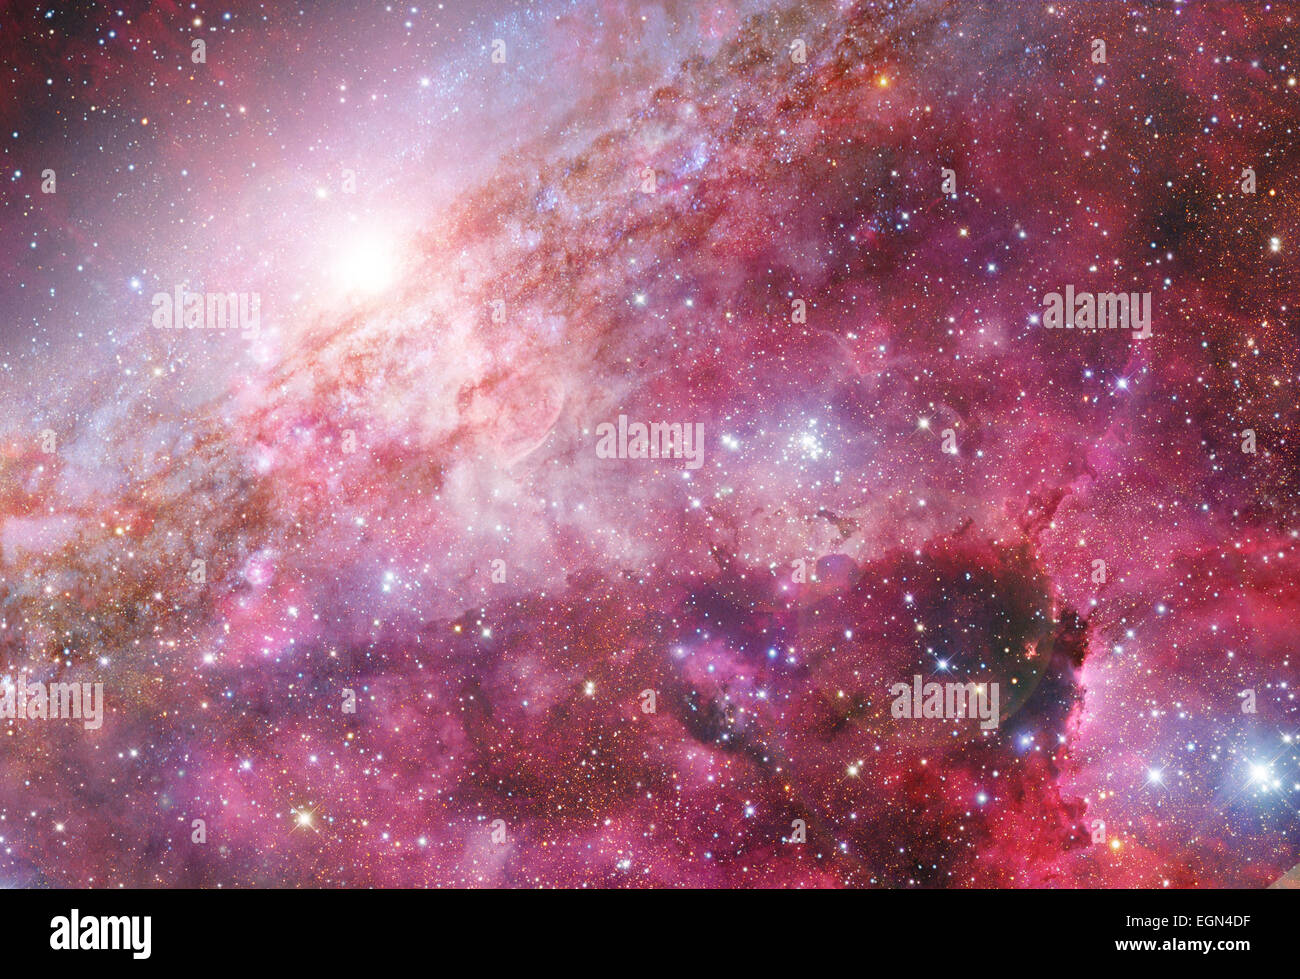 Galaxy starfield with nebulae Stock Photo